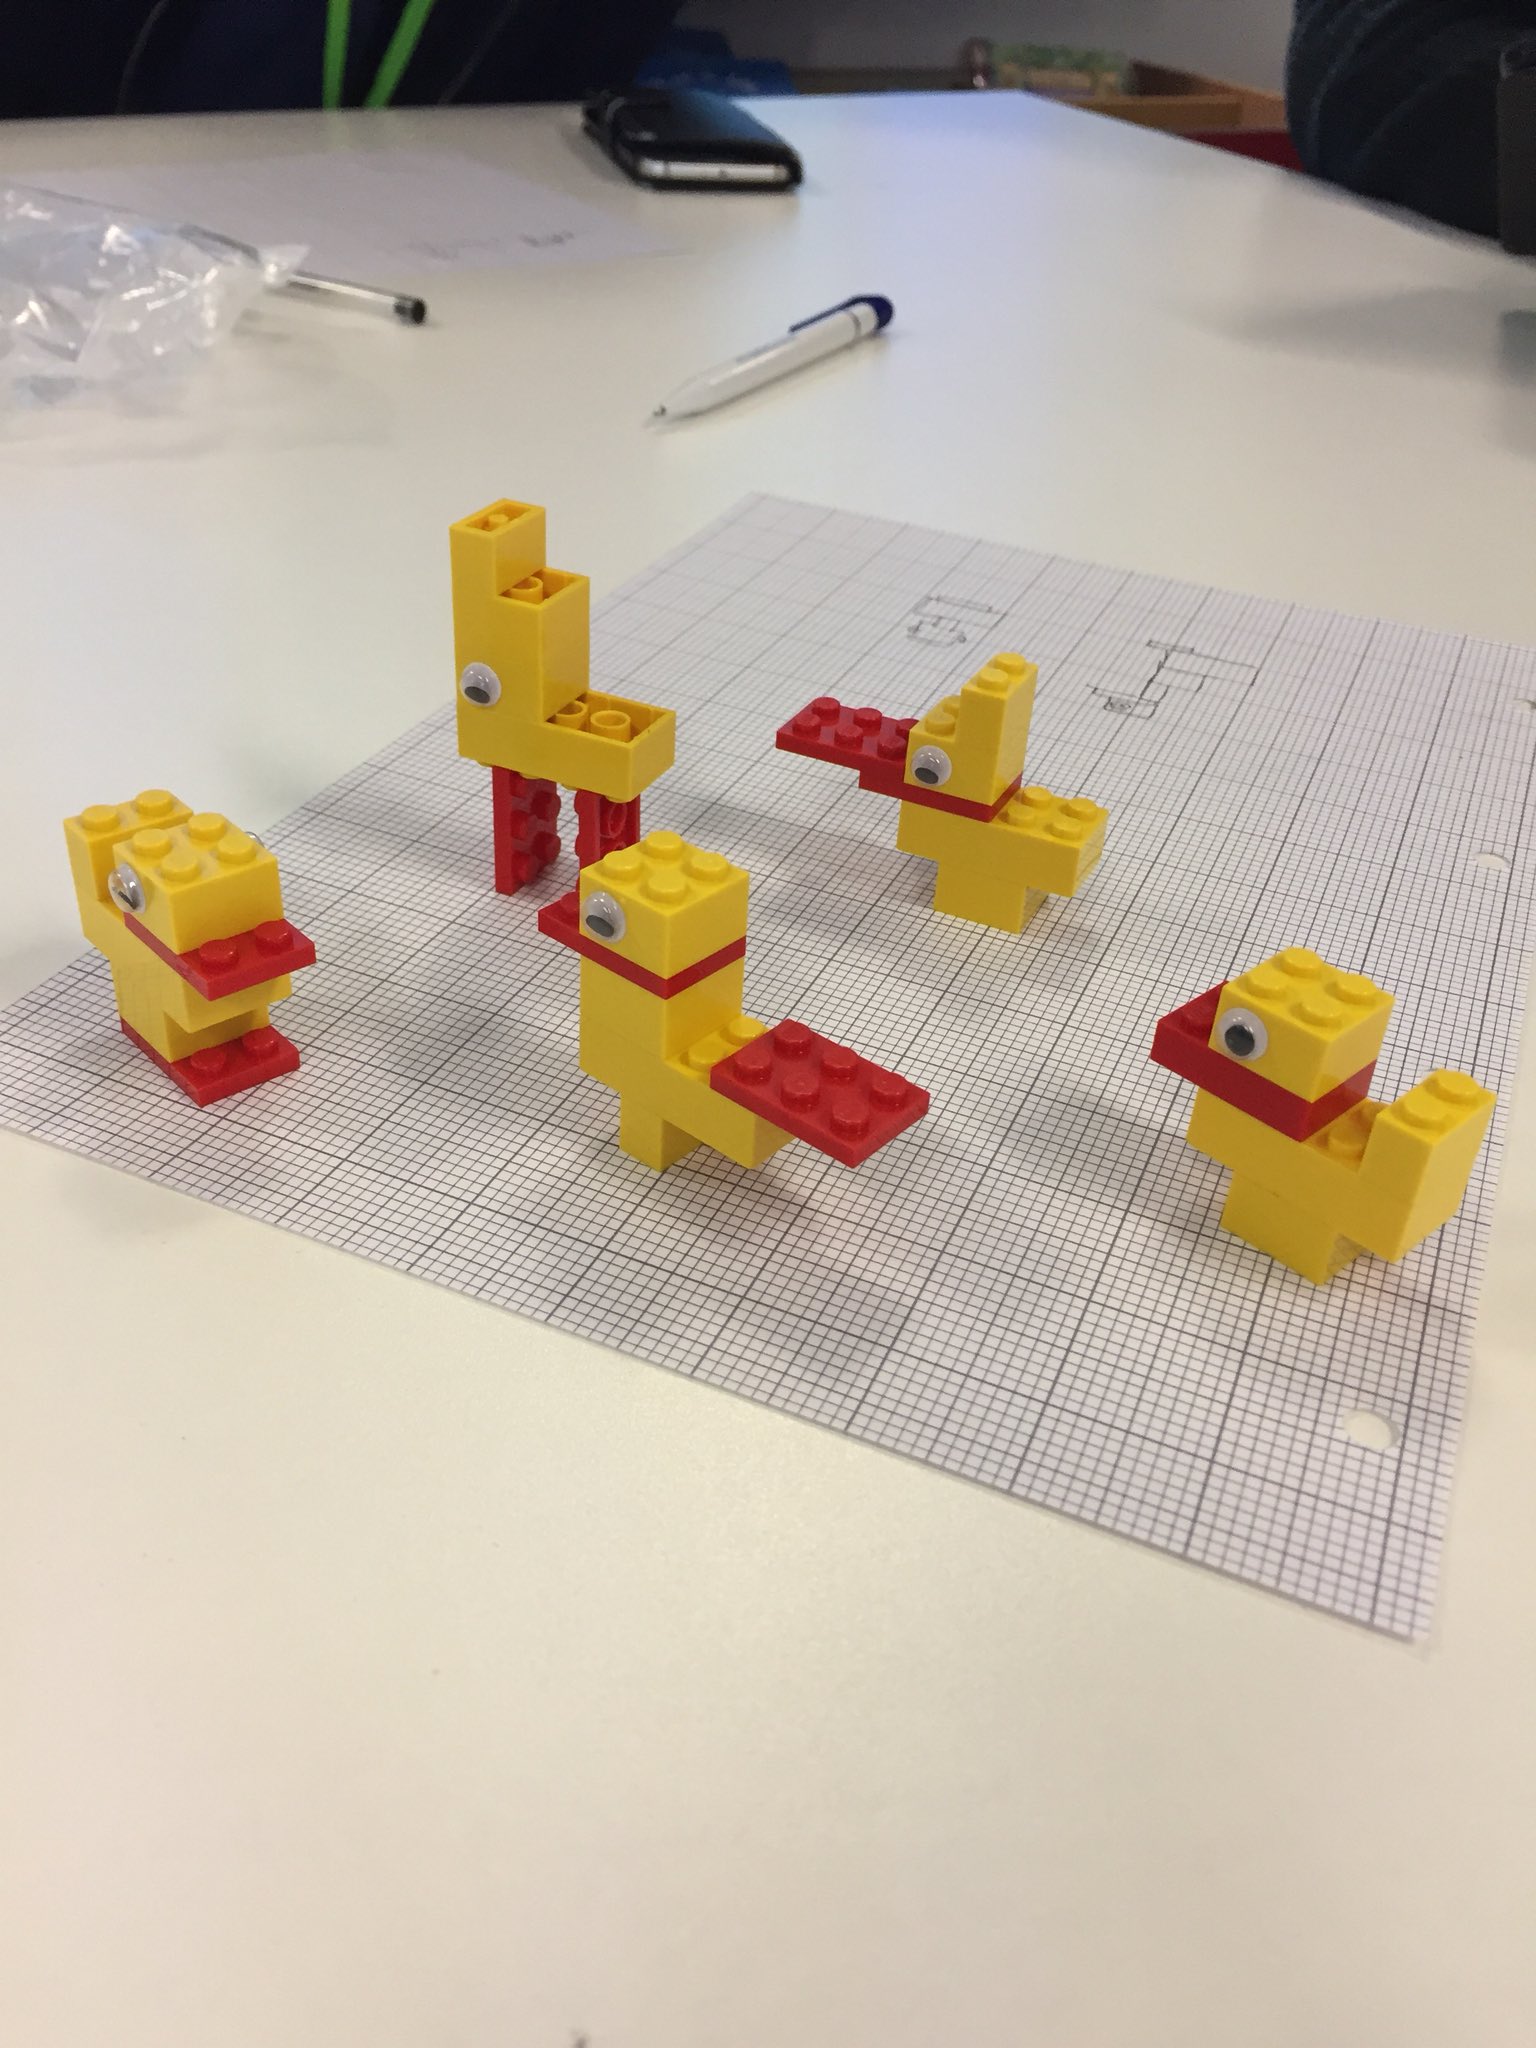 Ey’up duck! Lego serious play at #SocMedHE17 https://t.co/9g3JRzuLQk